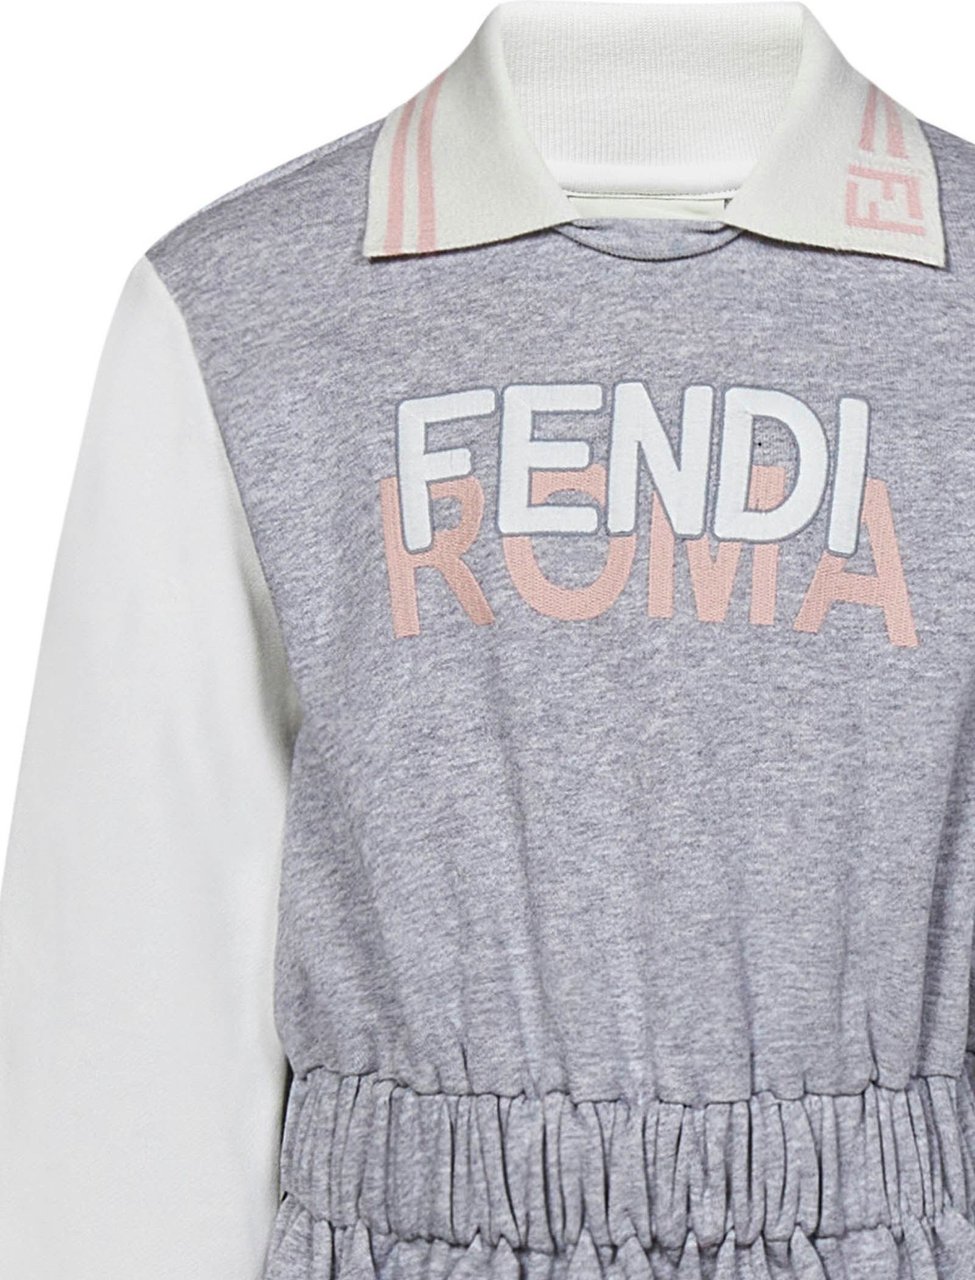 Fendi Fendi Kids Dresses Grey Grijs